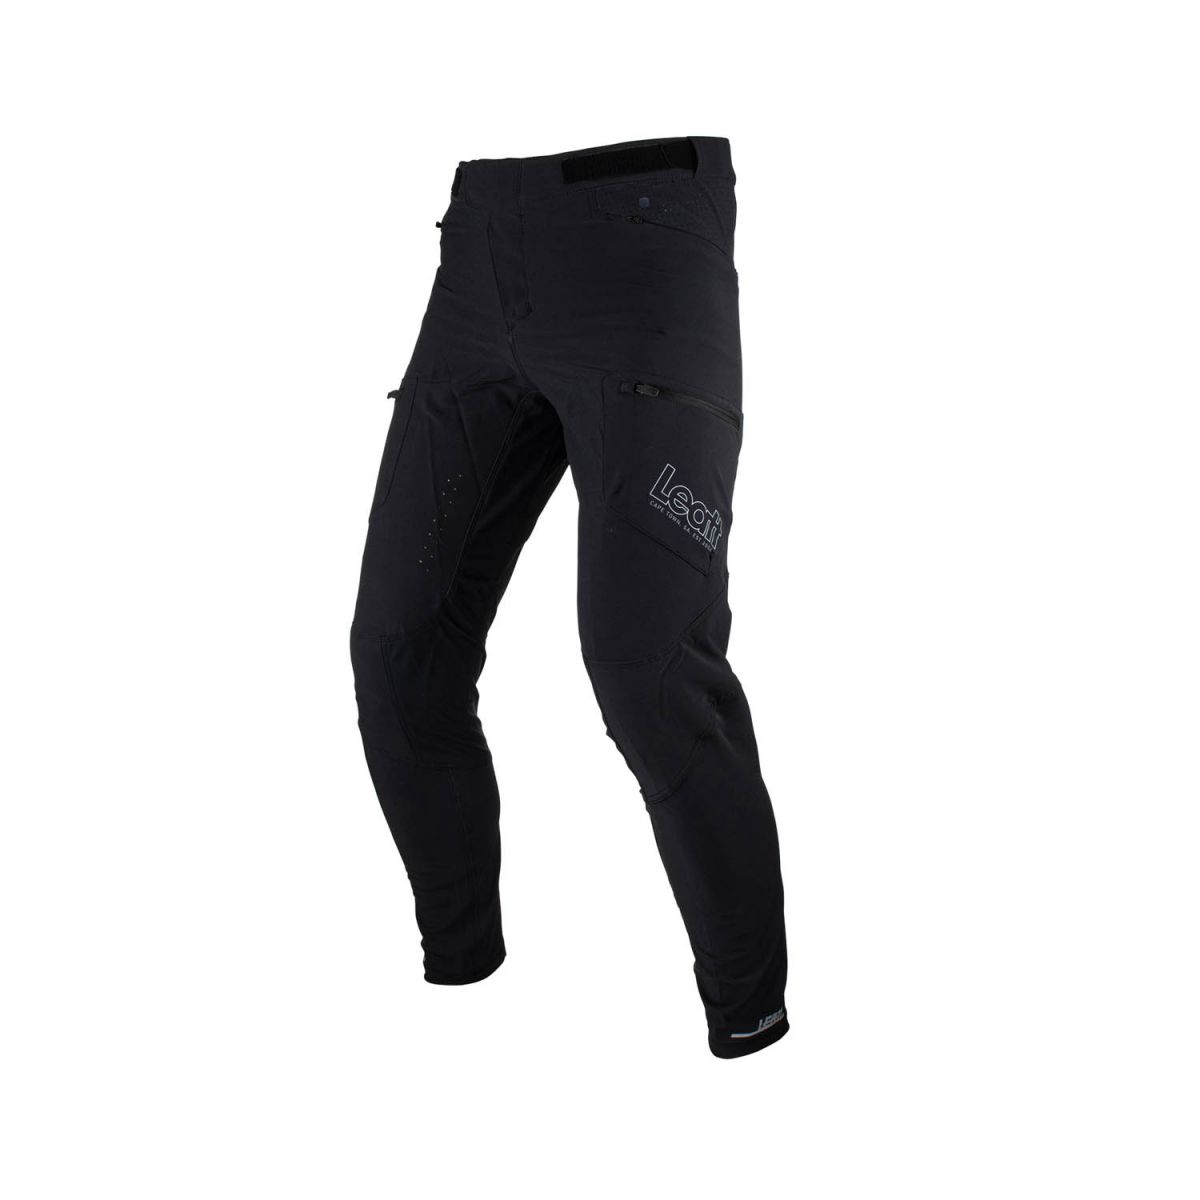 Pantalones largos de enduro mtb Leatt MTB enduro 3.0 | color negro | ebike | bicicleta